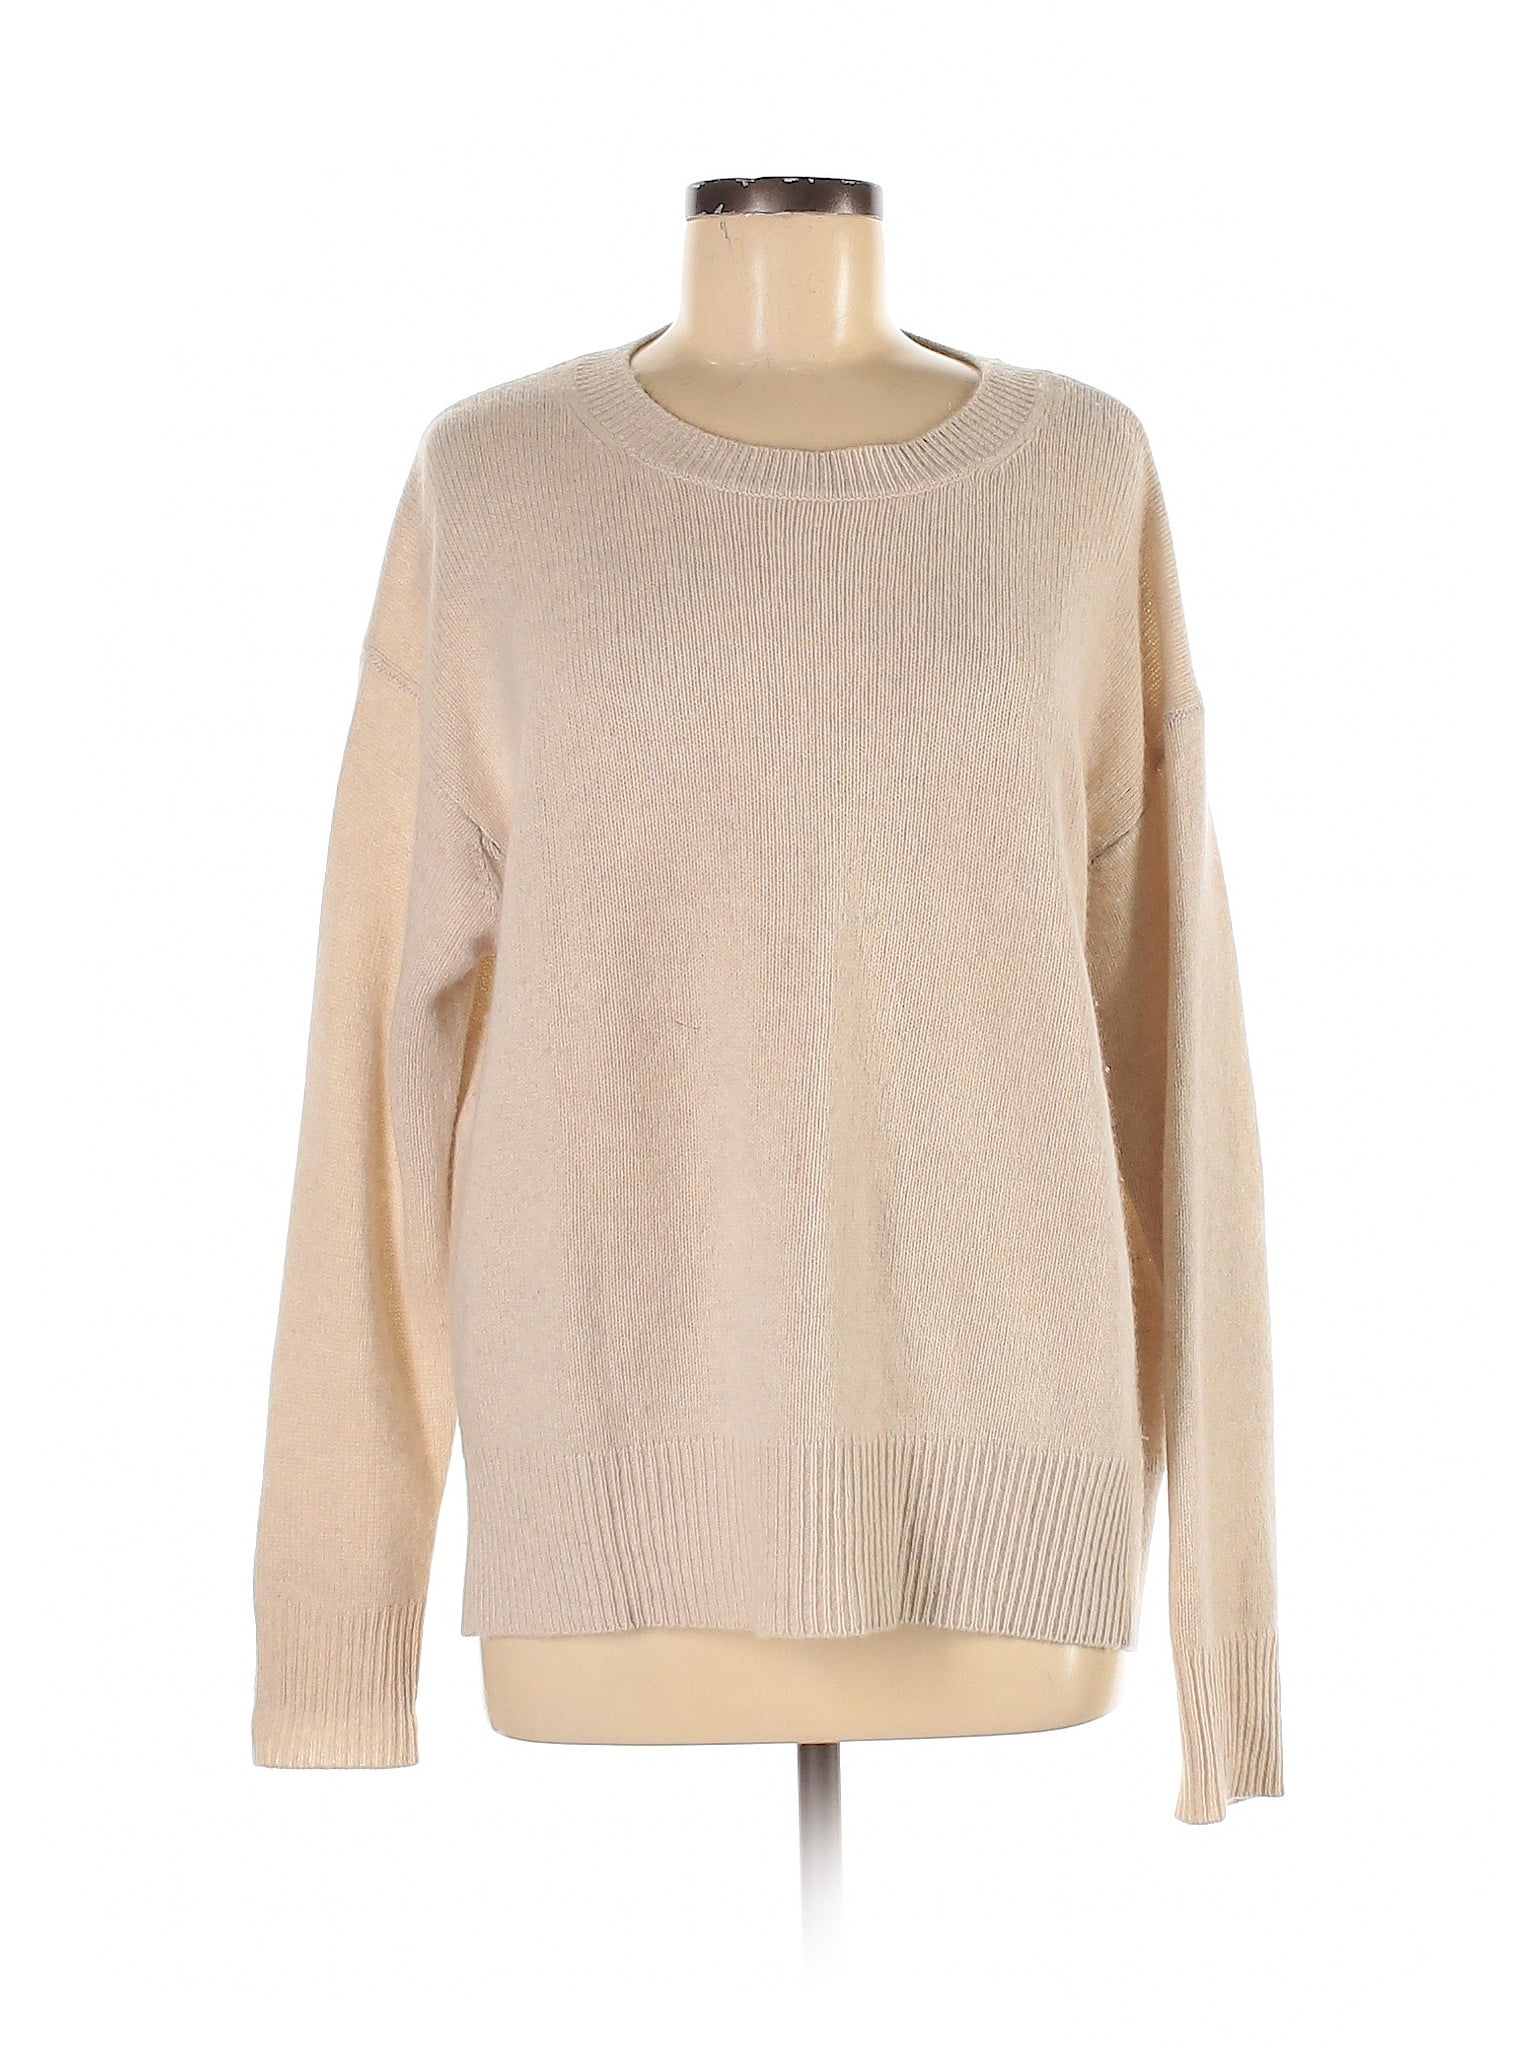 ZARA - Pre-Owned Zara Women's Size M Cashmere Pullover Sweater ...